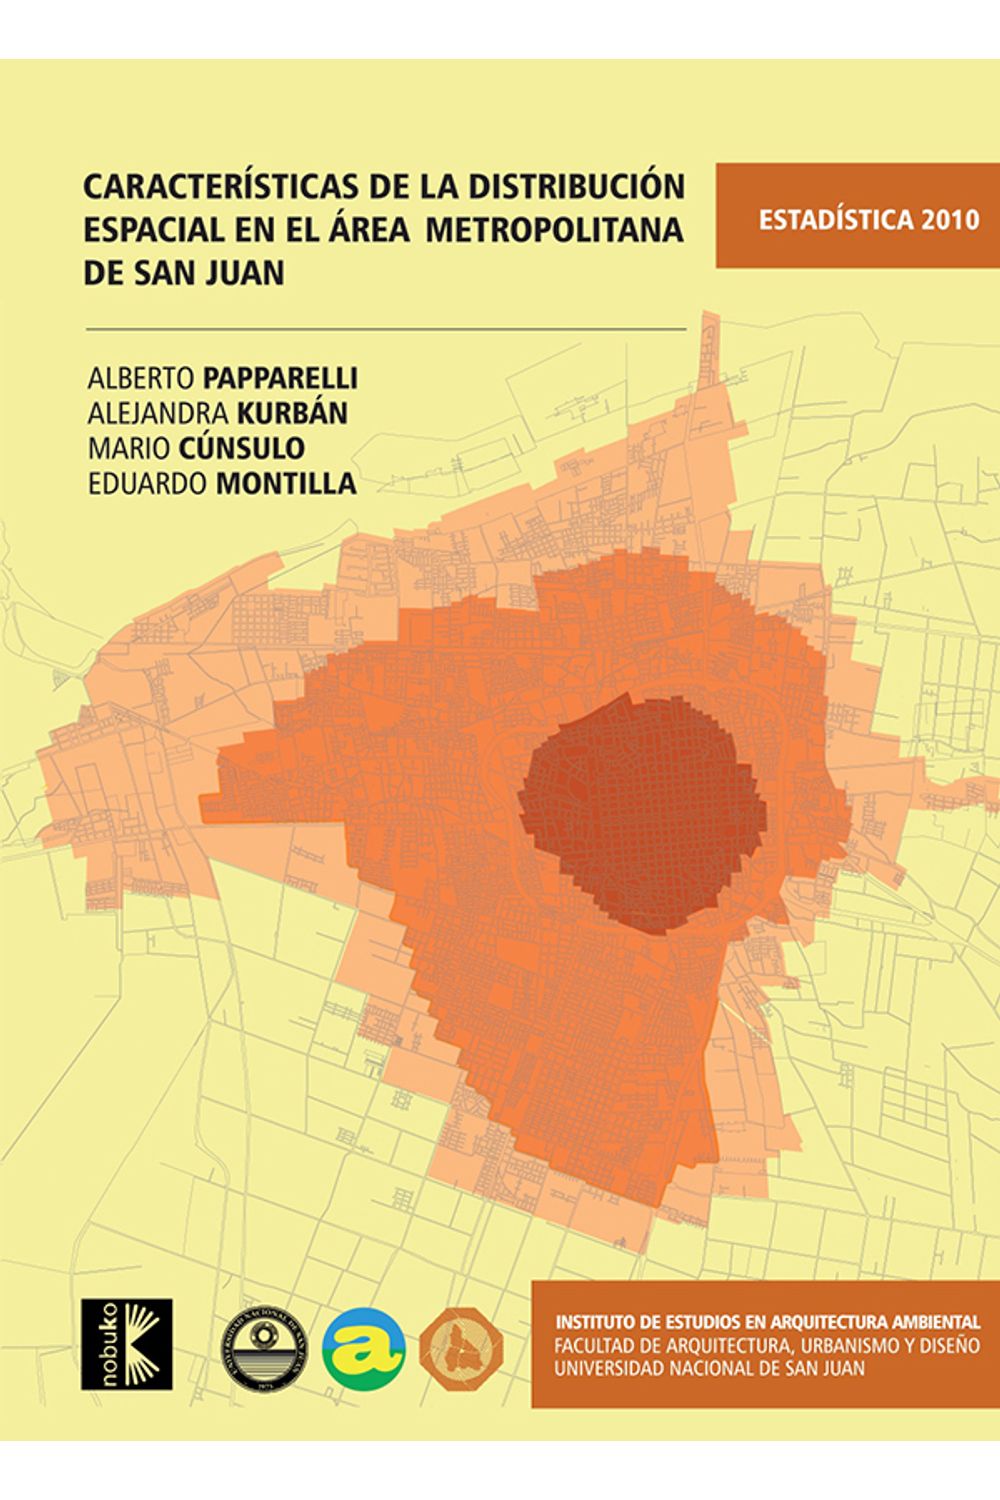 bm-caracteristicas-de-la-distribucion-espacial-del-area-metropolitana-de-san-juan-2010-nobukodiseno-editorial-9789873607844